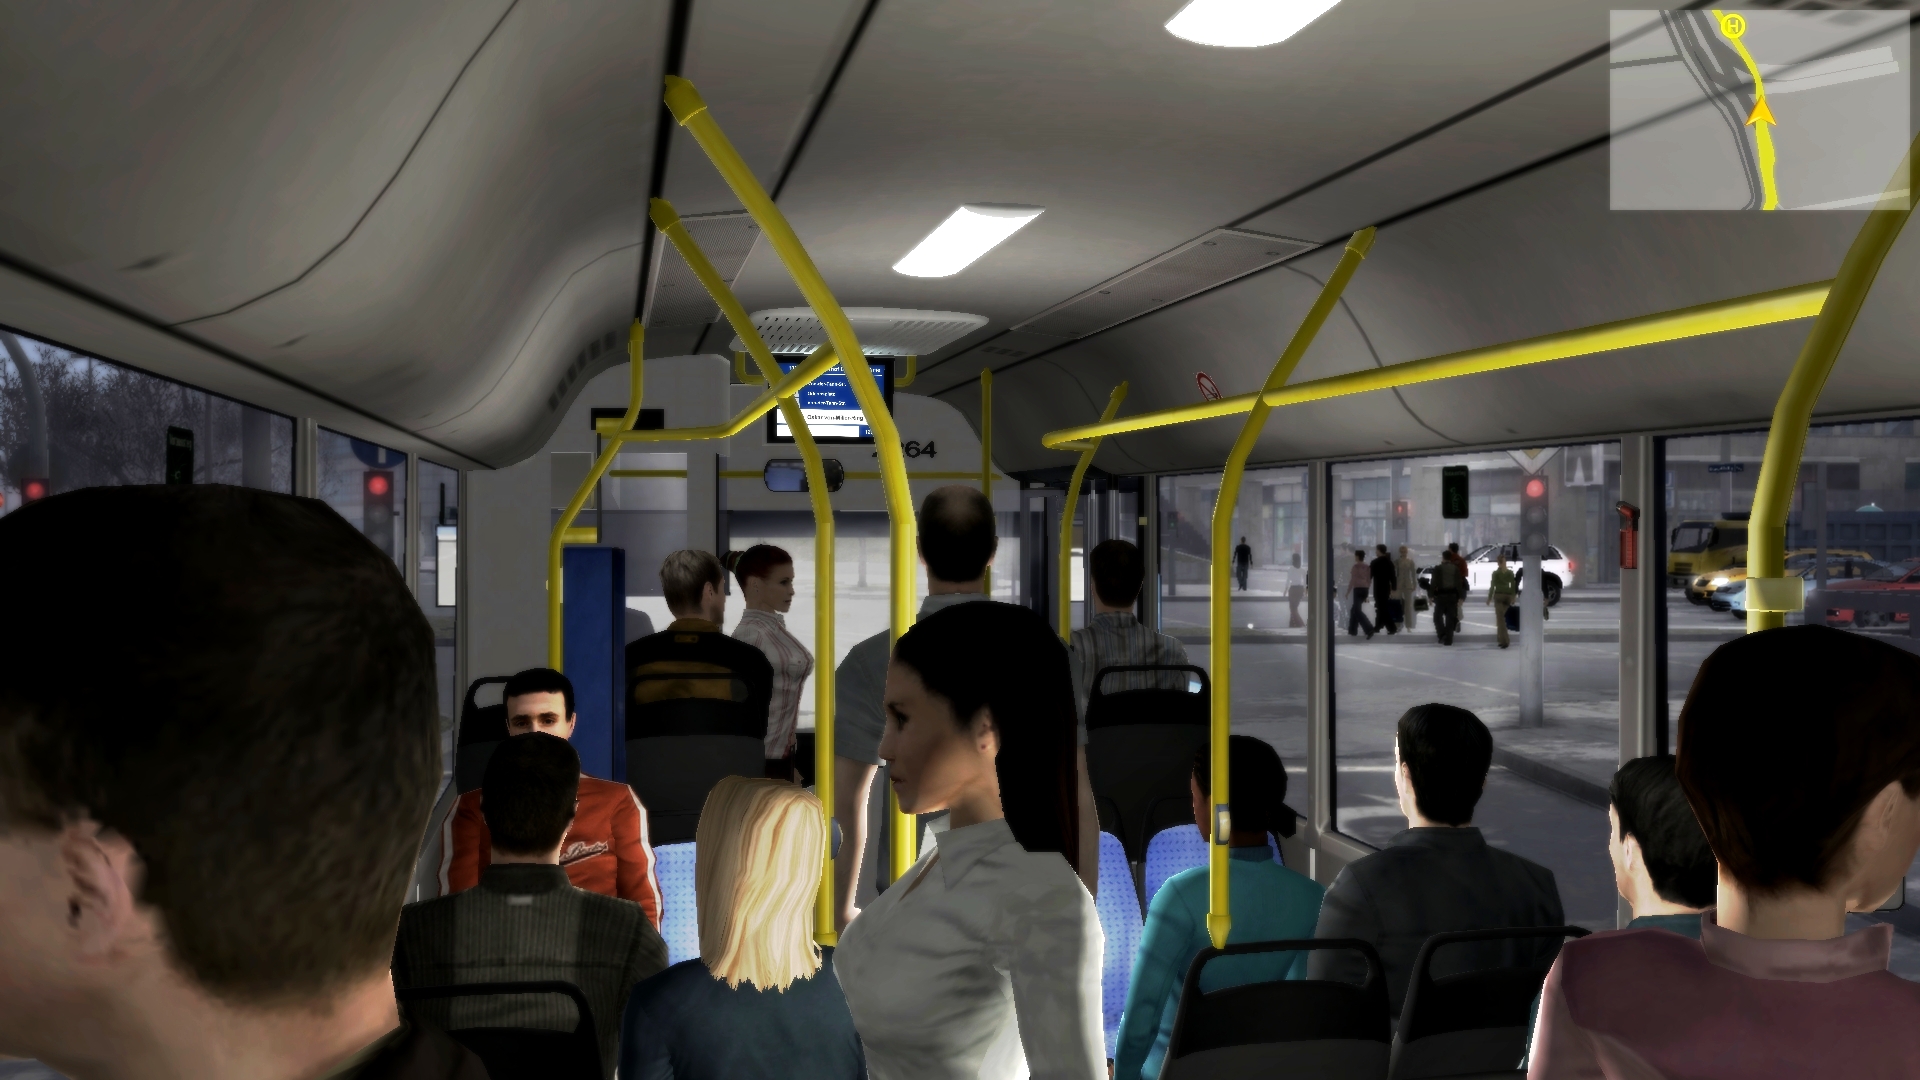 city bus simulator munich download torrent